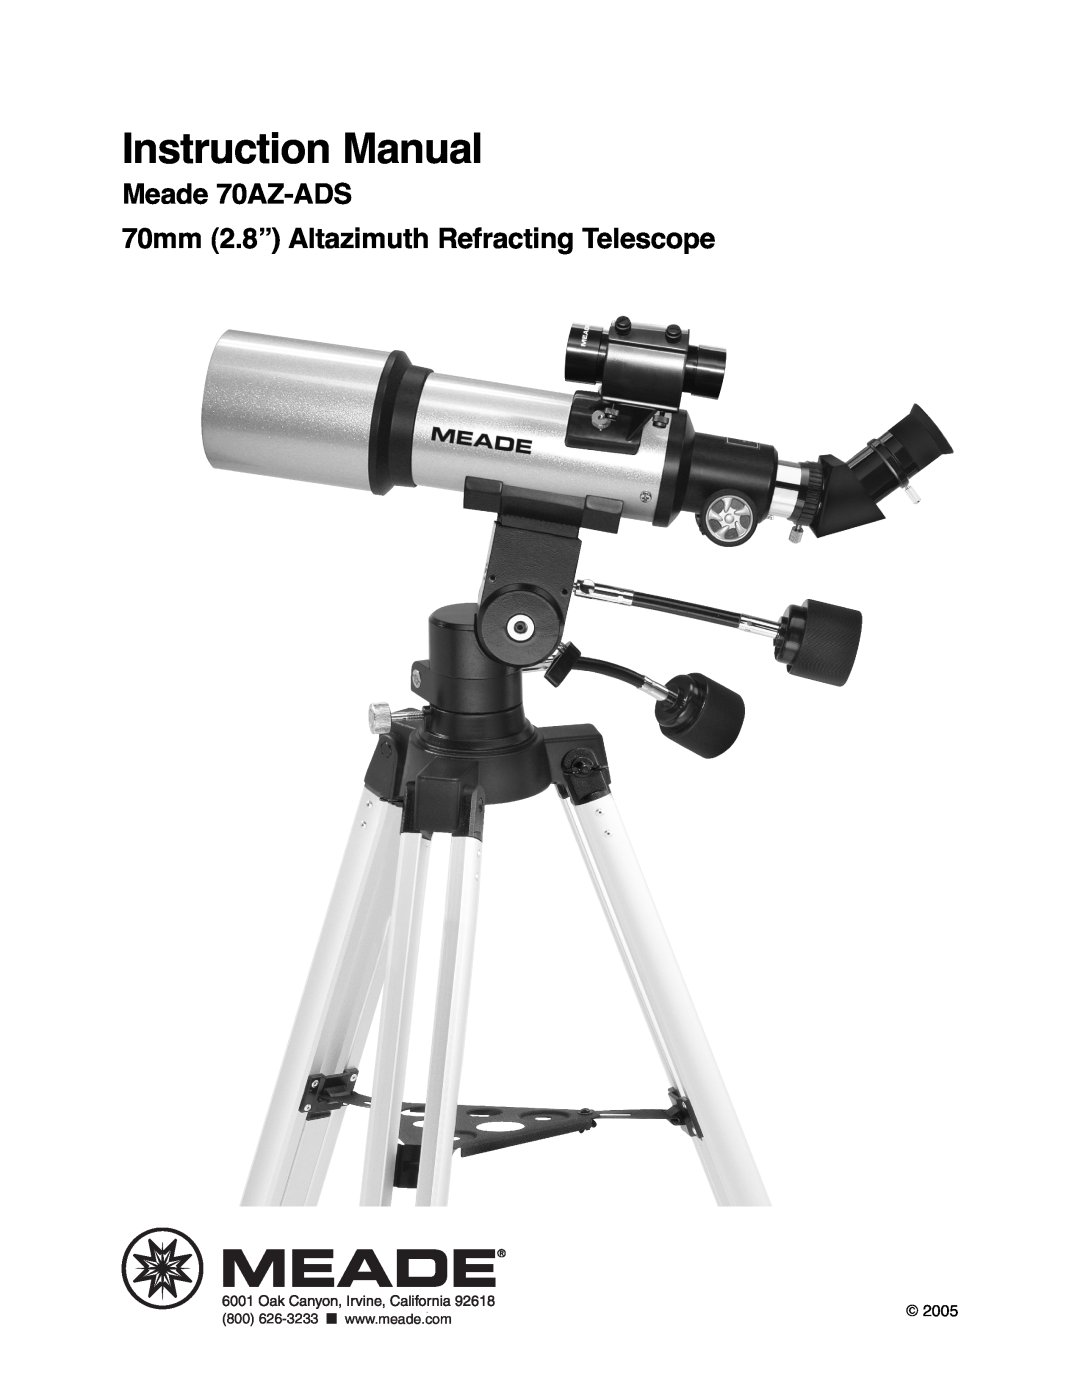 Meade instruction manual Meade 70AZ-ADS 70mm 2.8” Altazimuth Refracting Telescope, 2005 